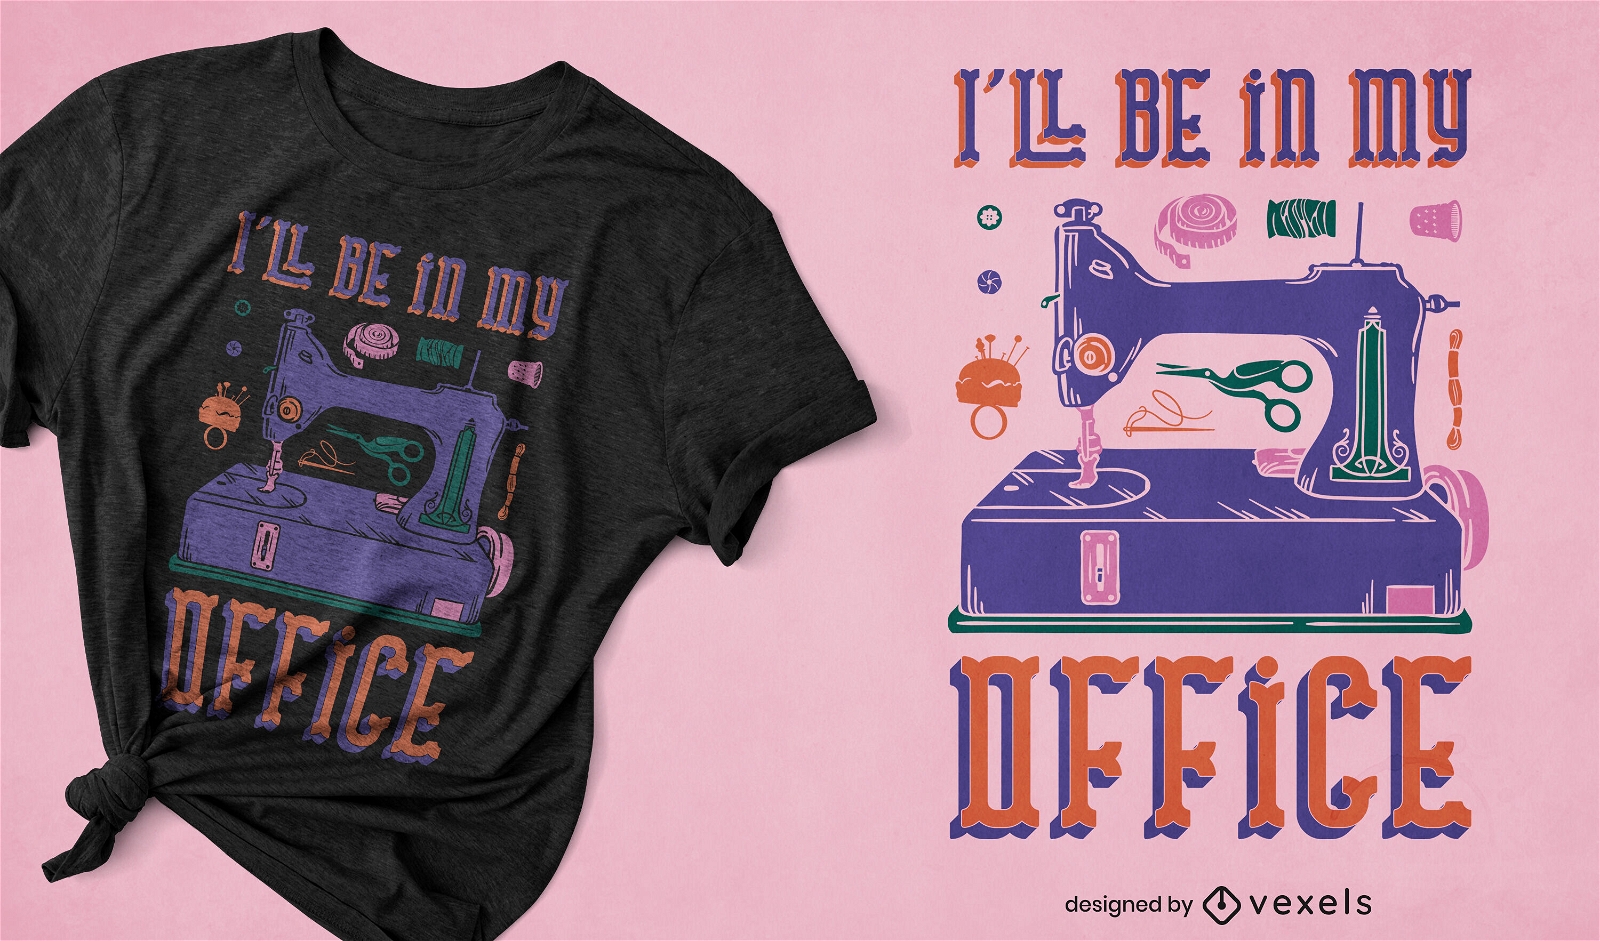 Sewing machine quote t-shirt design